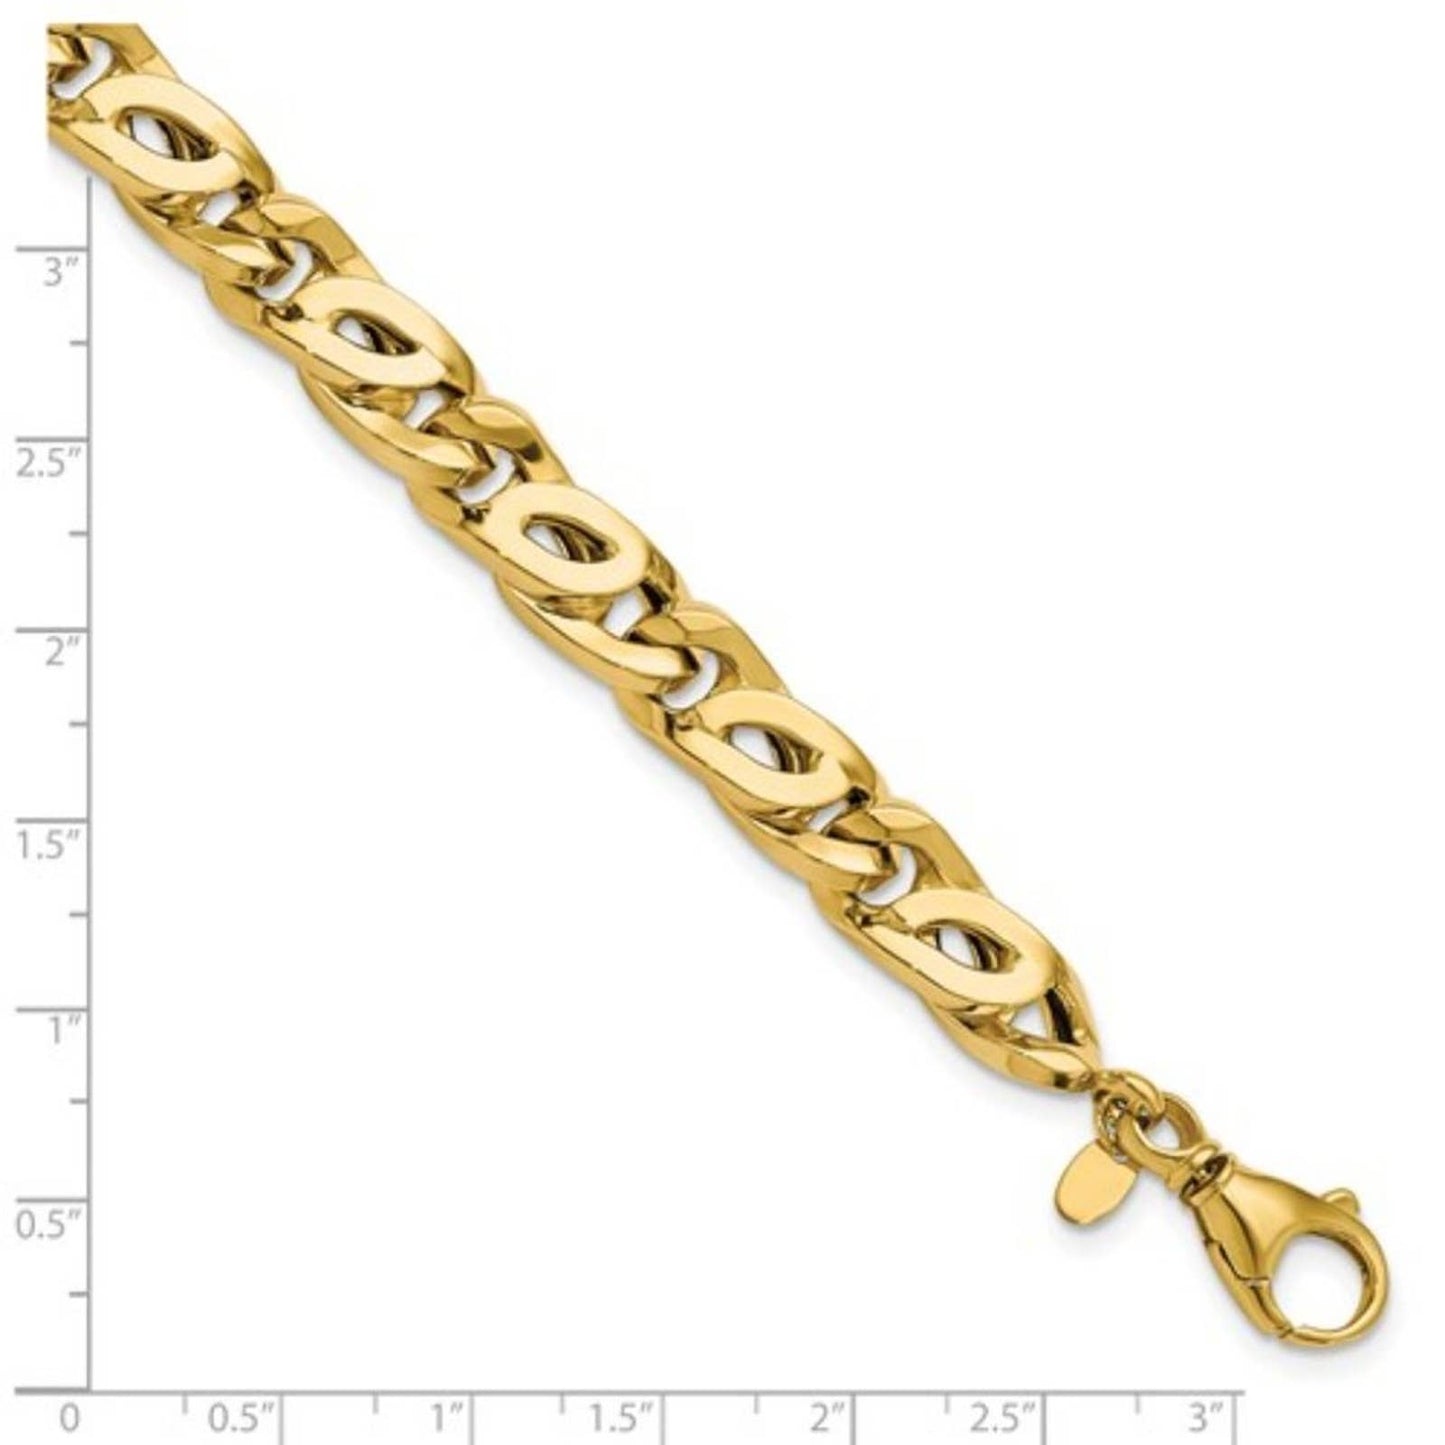 New, 14k Gold Men's Tiger's Eye Link Bracelet, 9 inches long